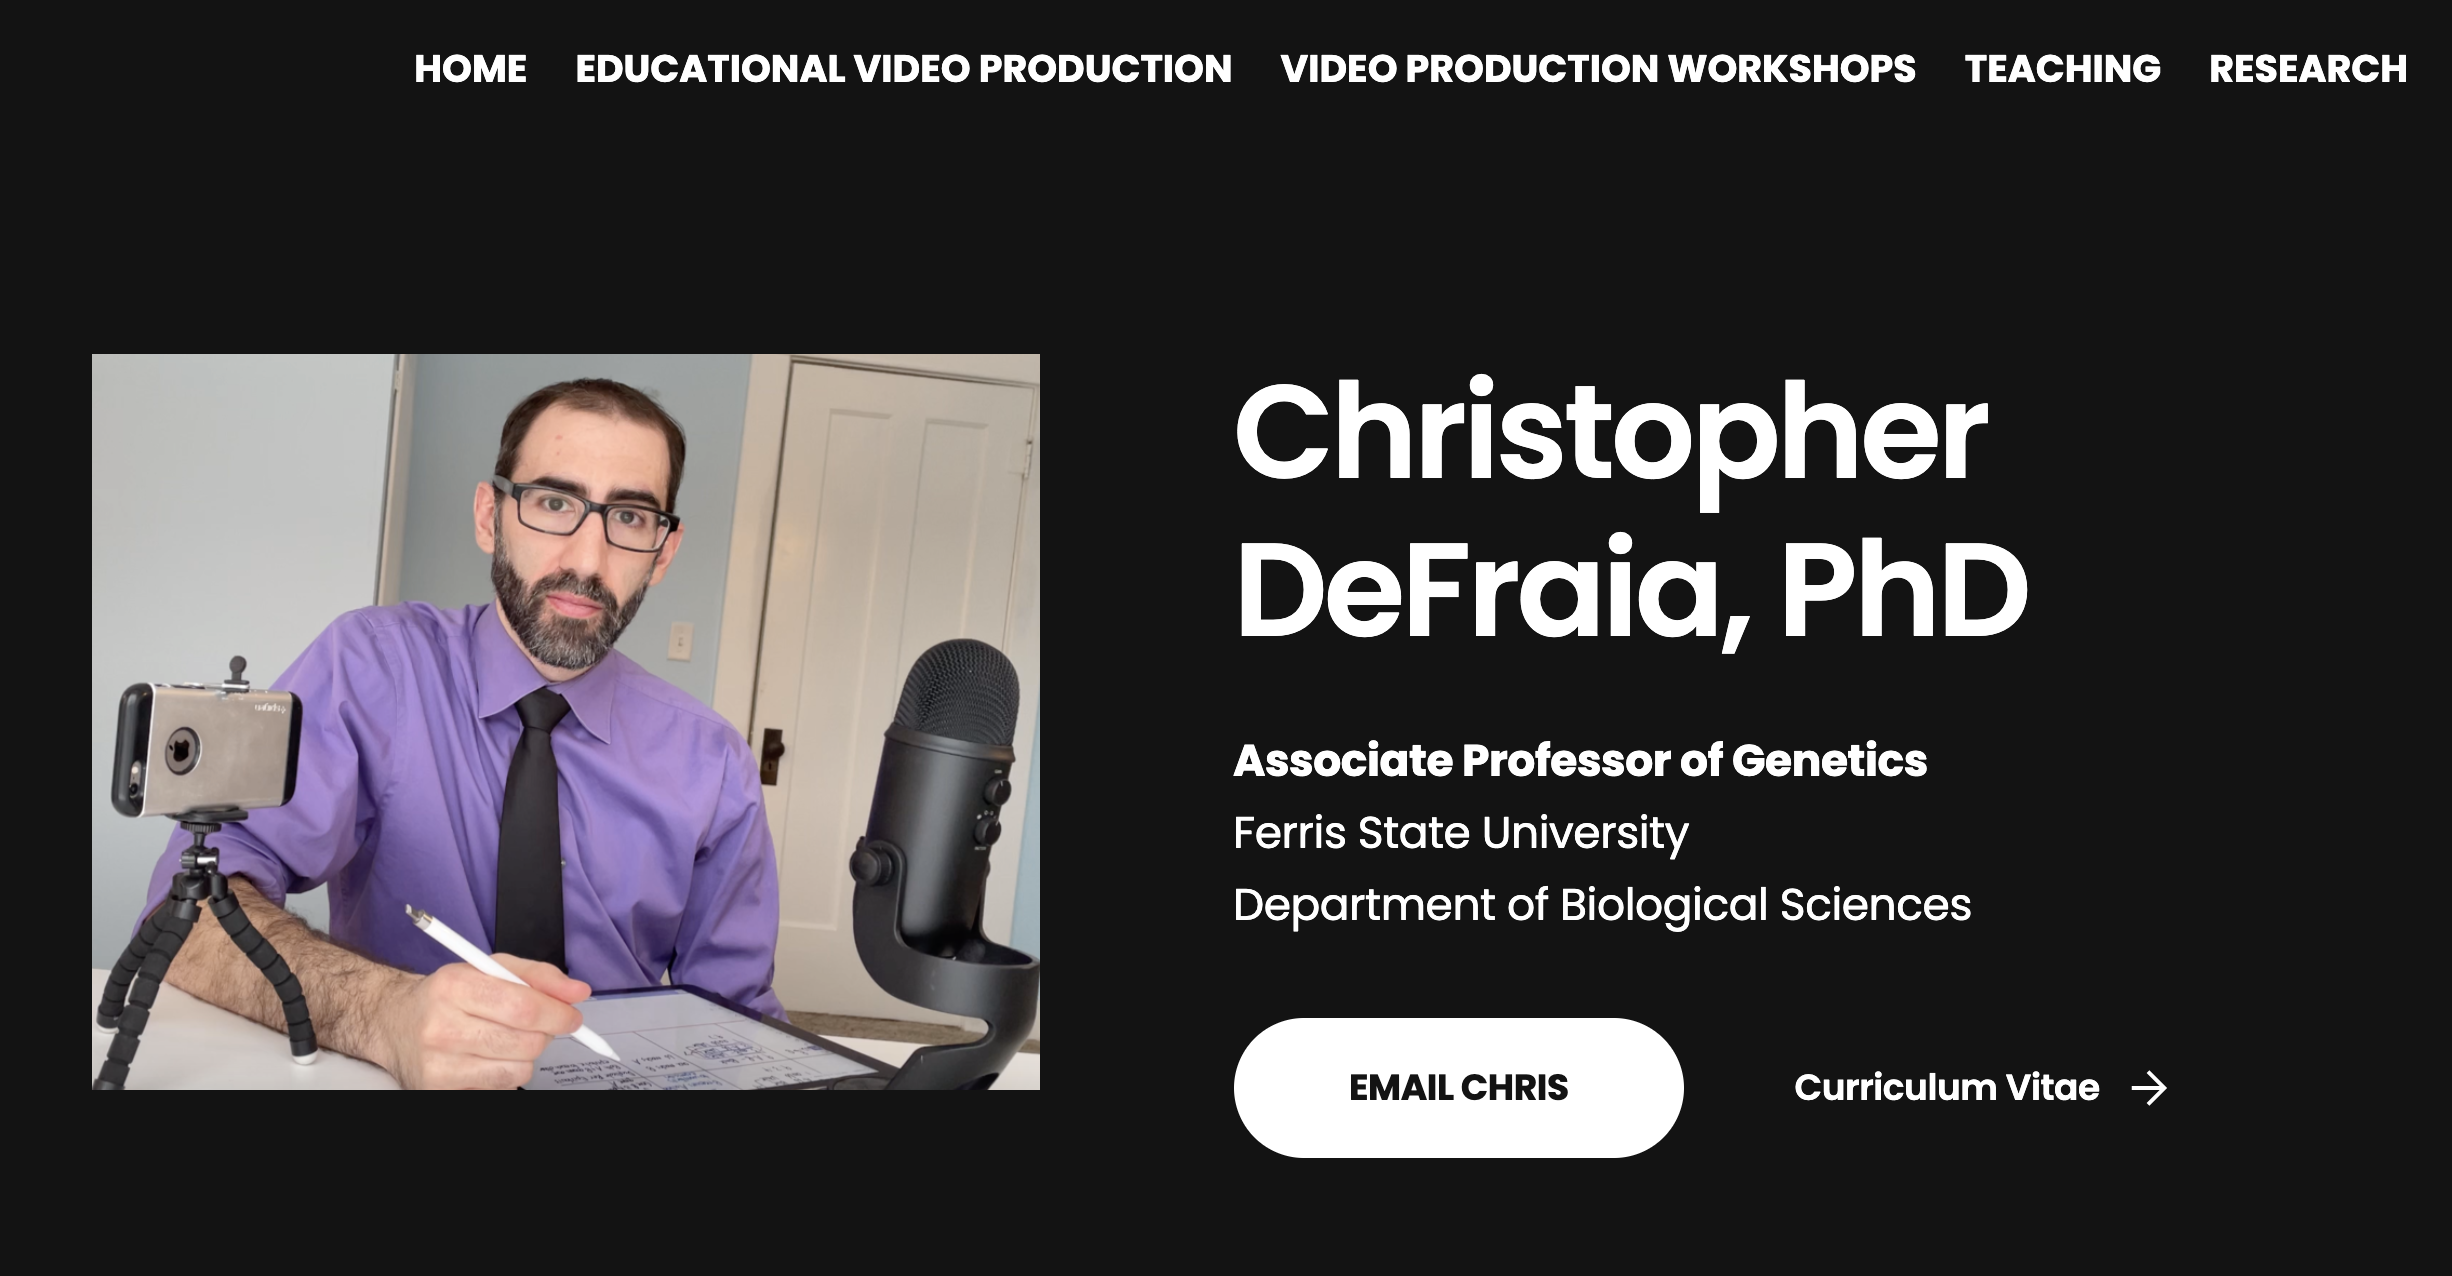 Chris DeFraia's Personal Academic Website